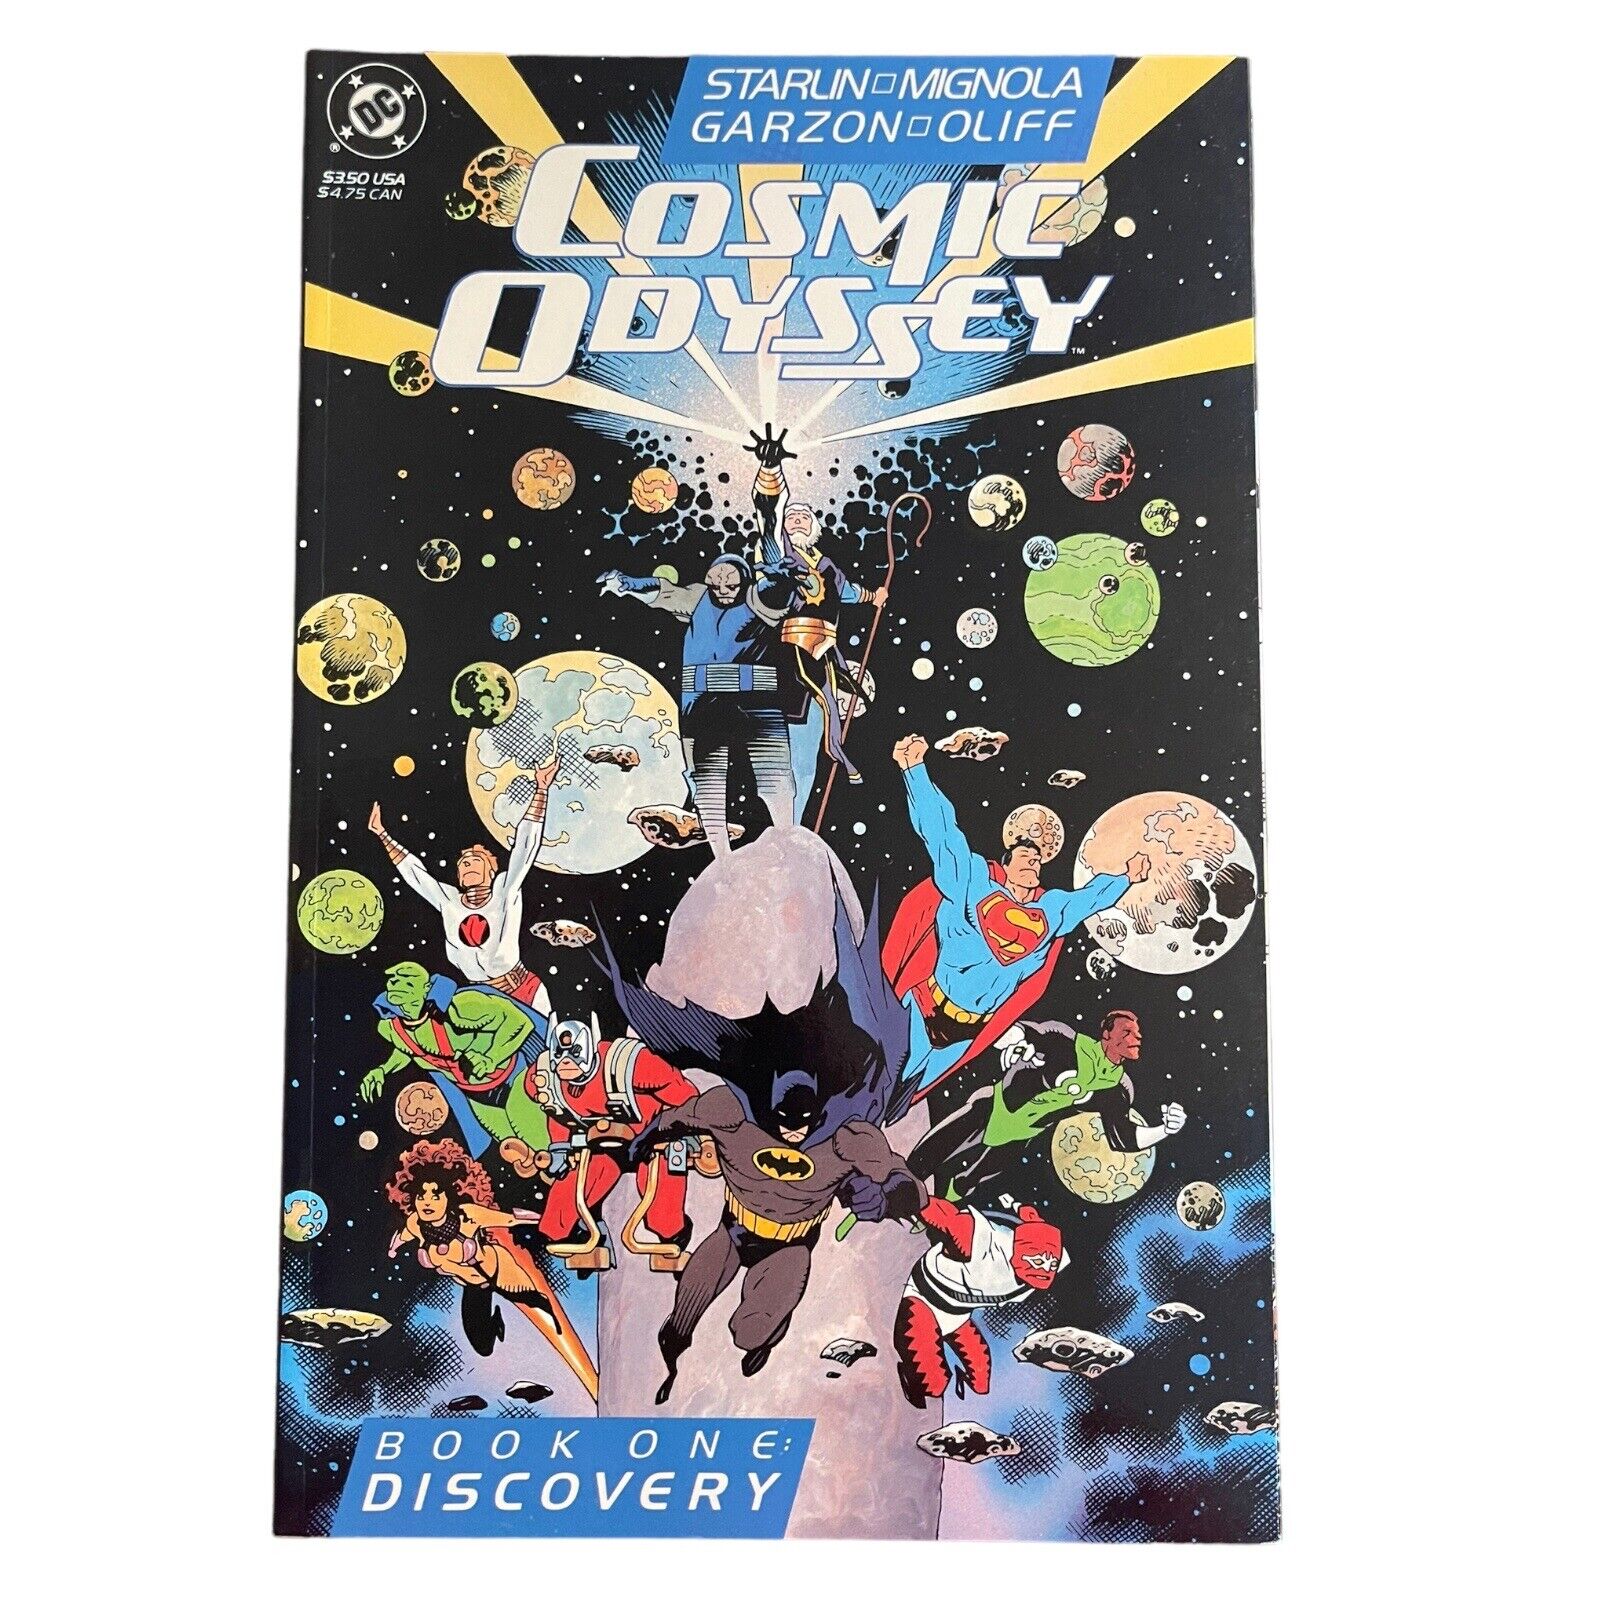 DC Comics Cosmic Odyssey Book One 1 Discovery 1988 Starlin Mignola Garzon Oliff